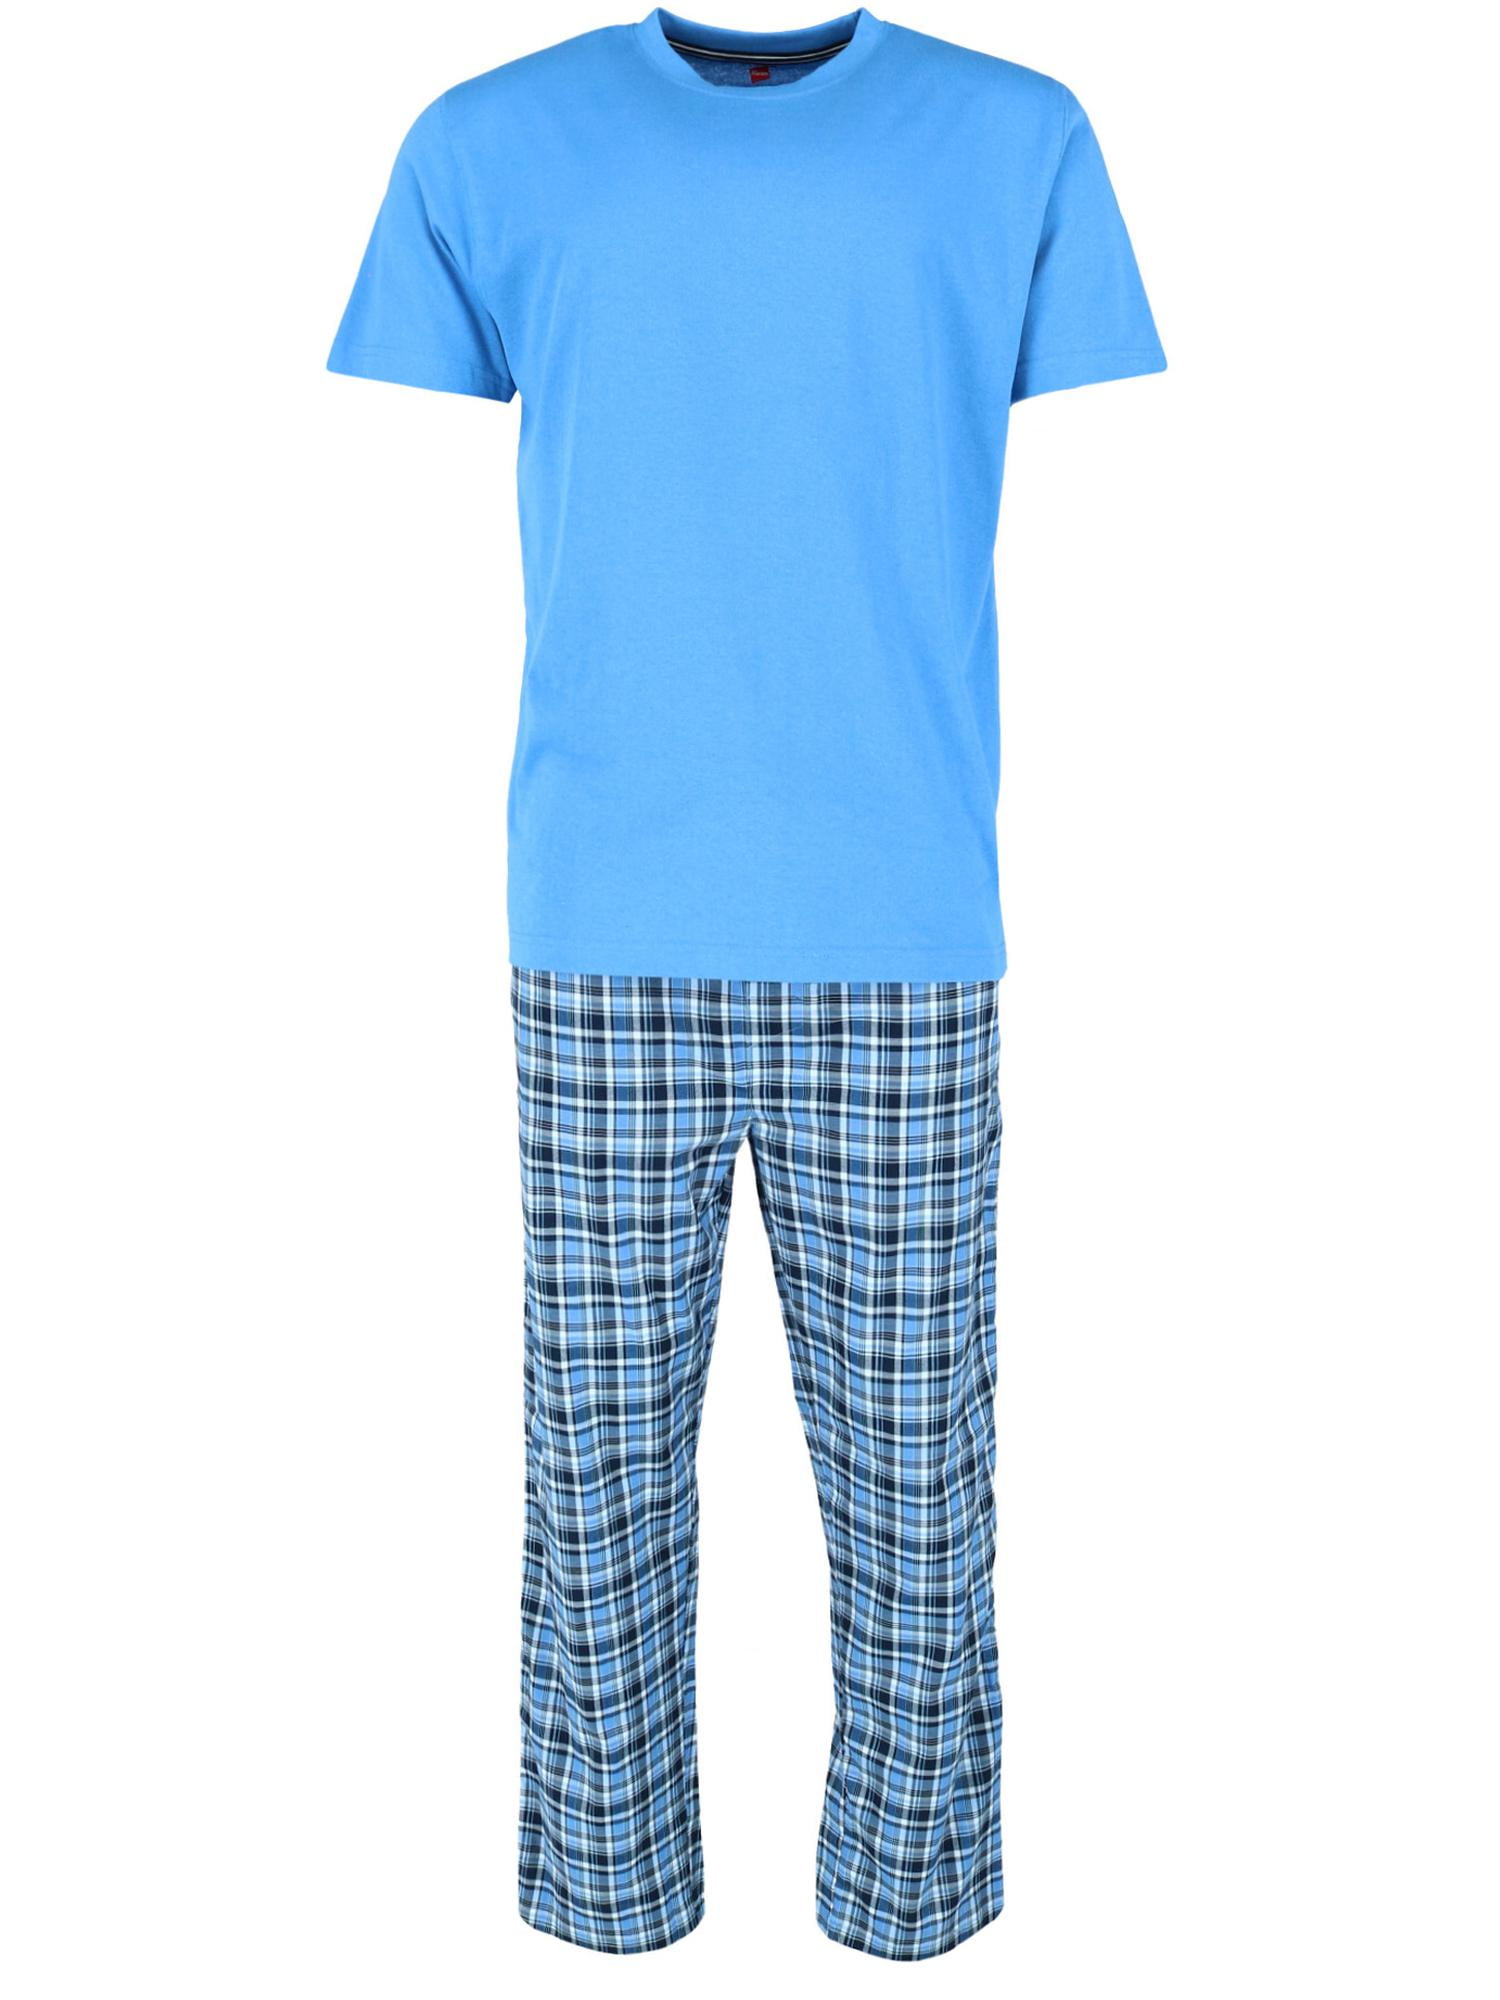 ThreadMills Mens Pyjamas Set Mens Pjs Cotton Short Sleeves Round Neck T-Shirts Woven Mens Pyjamas Checked Pyjamas for Men